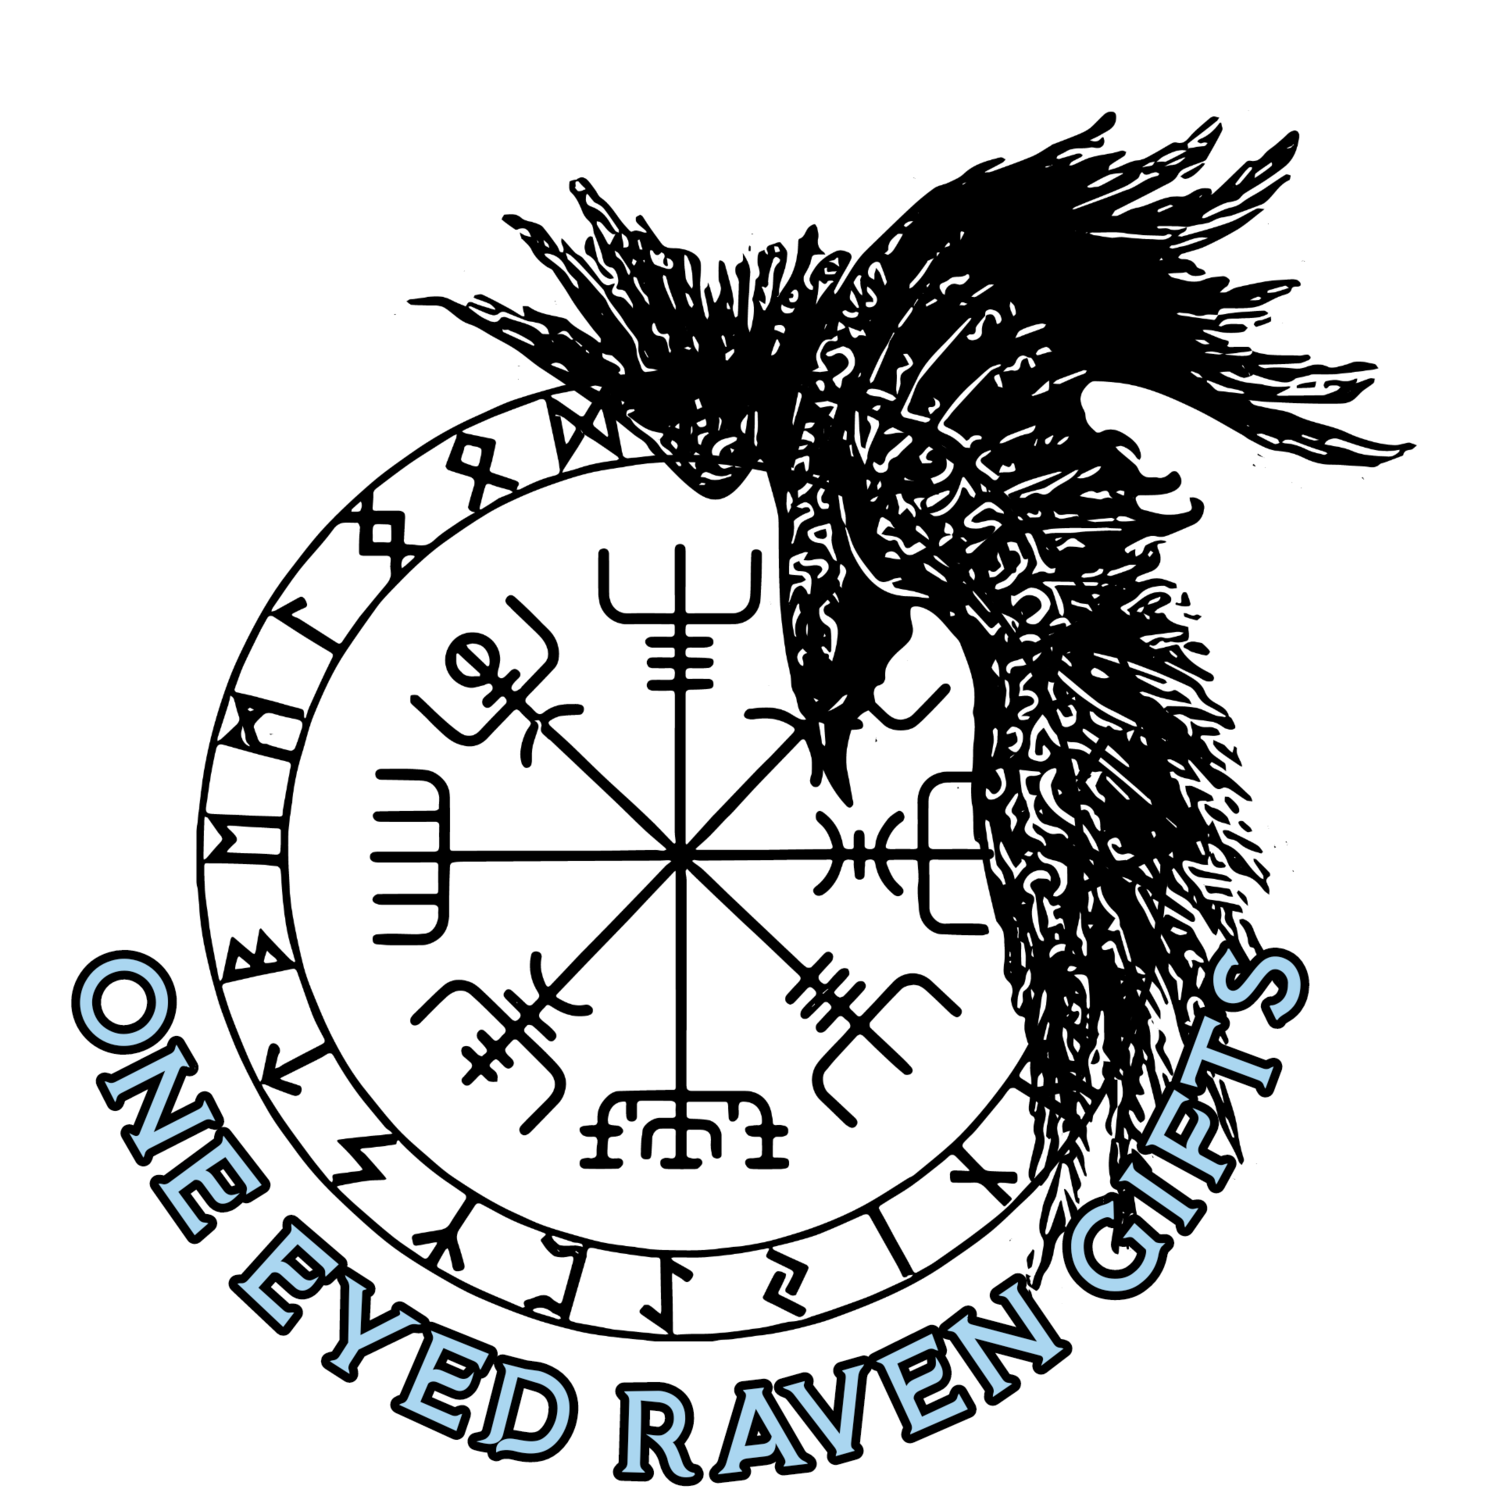 One Eyed Raven Gifts, LLC